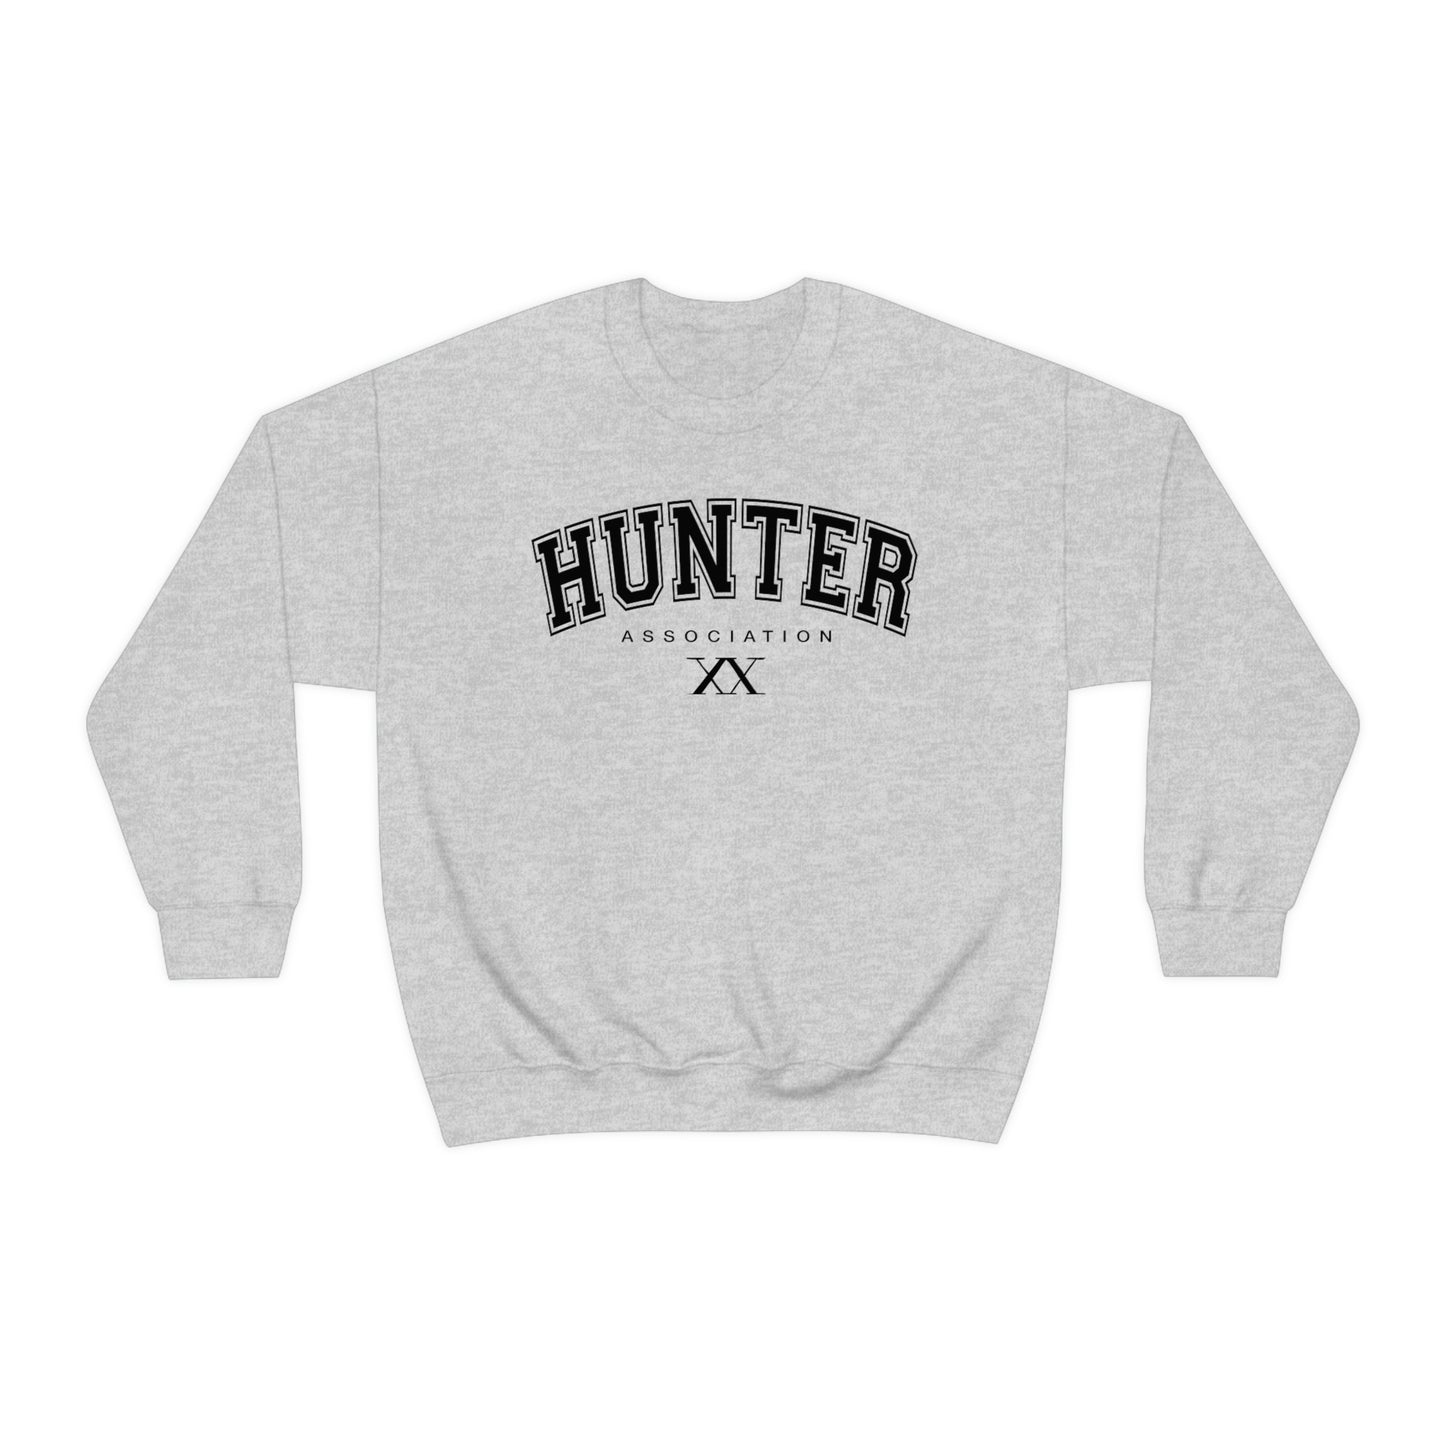 Hunter Associations sweatshirt